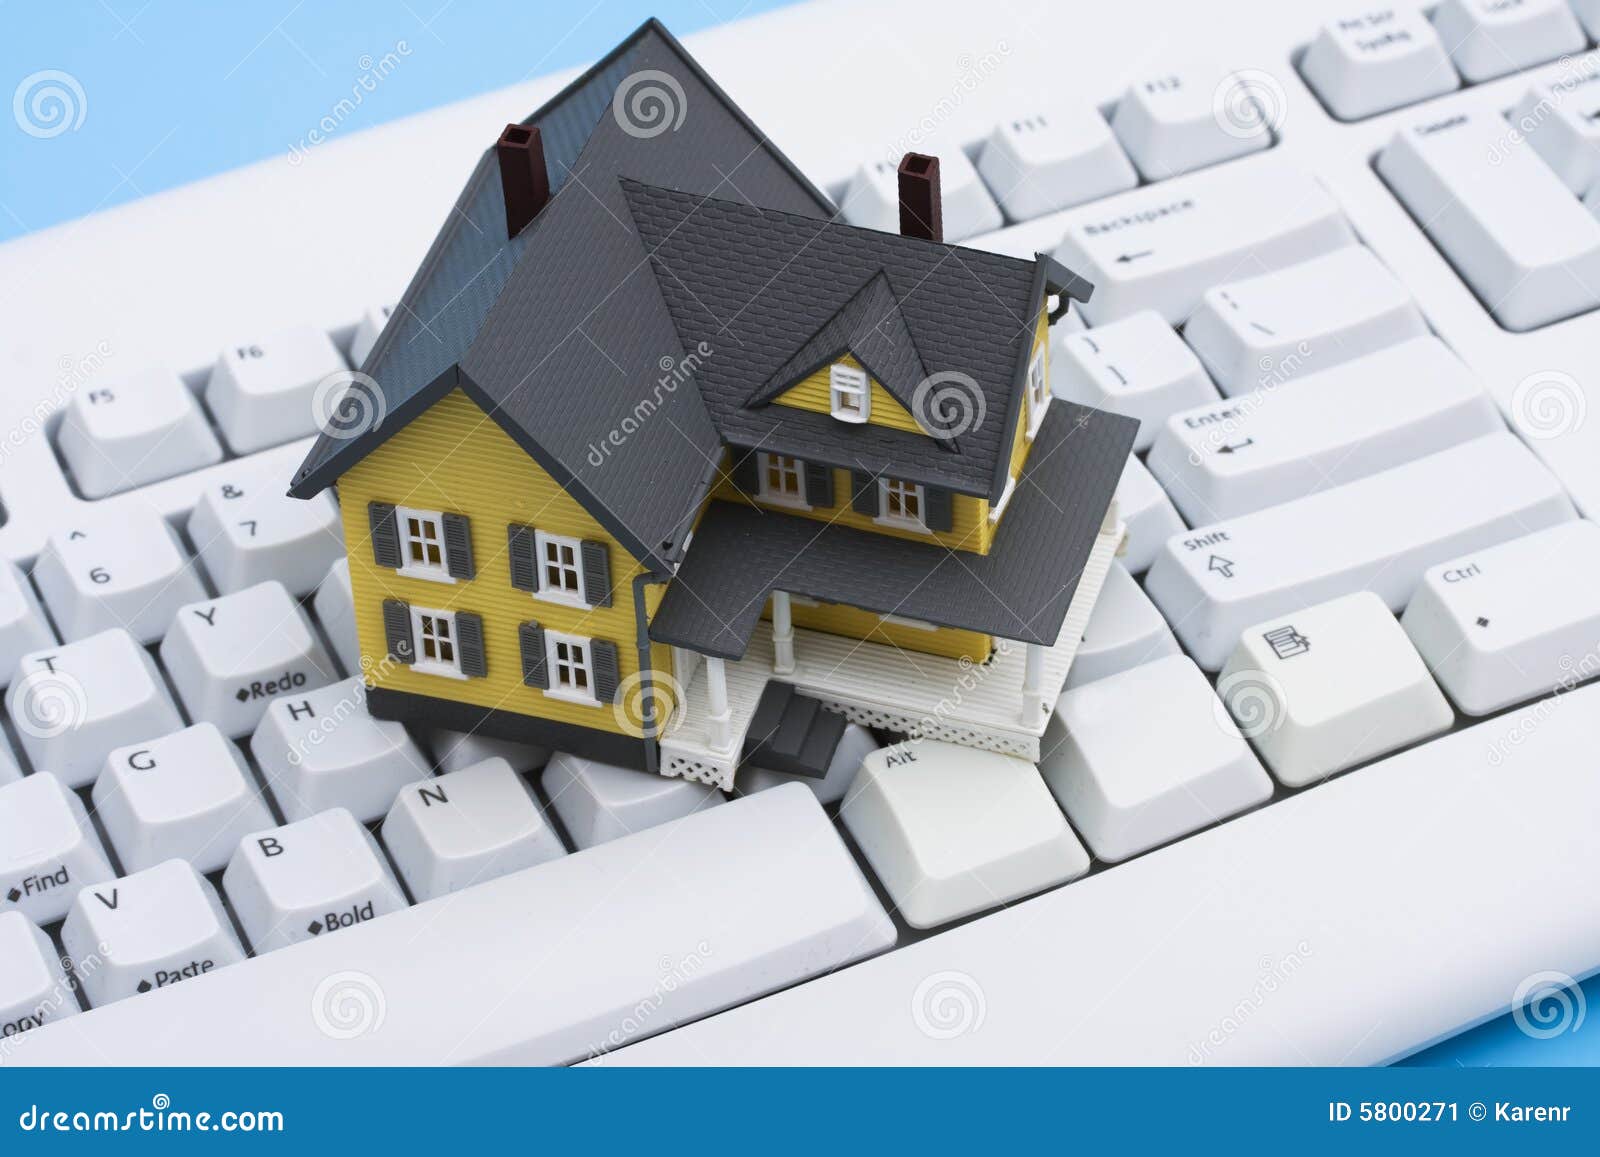 online-real-estate-5800271.jpg